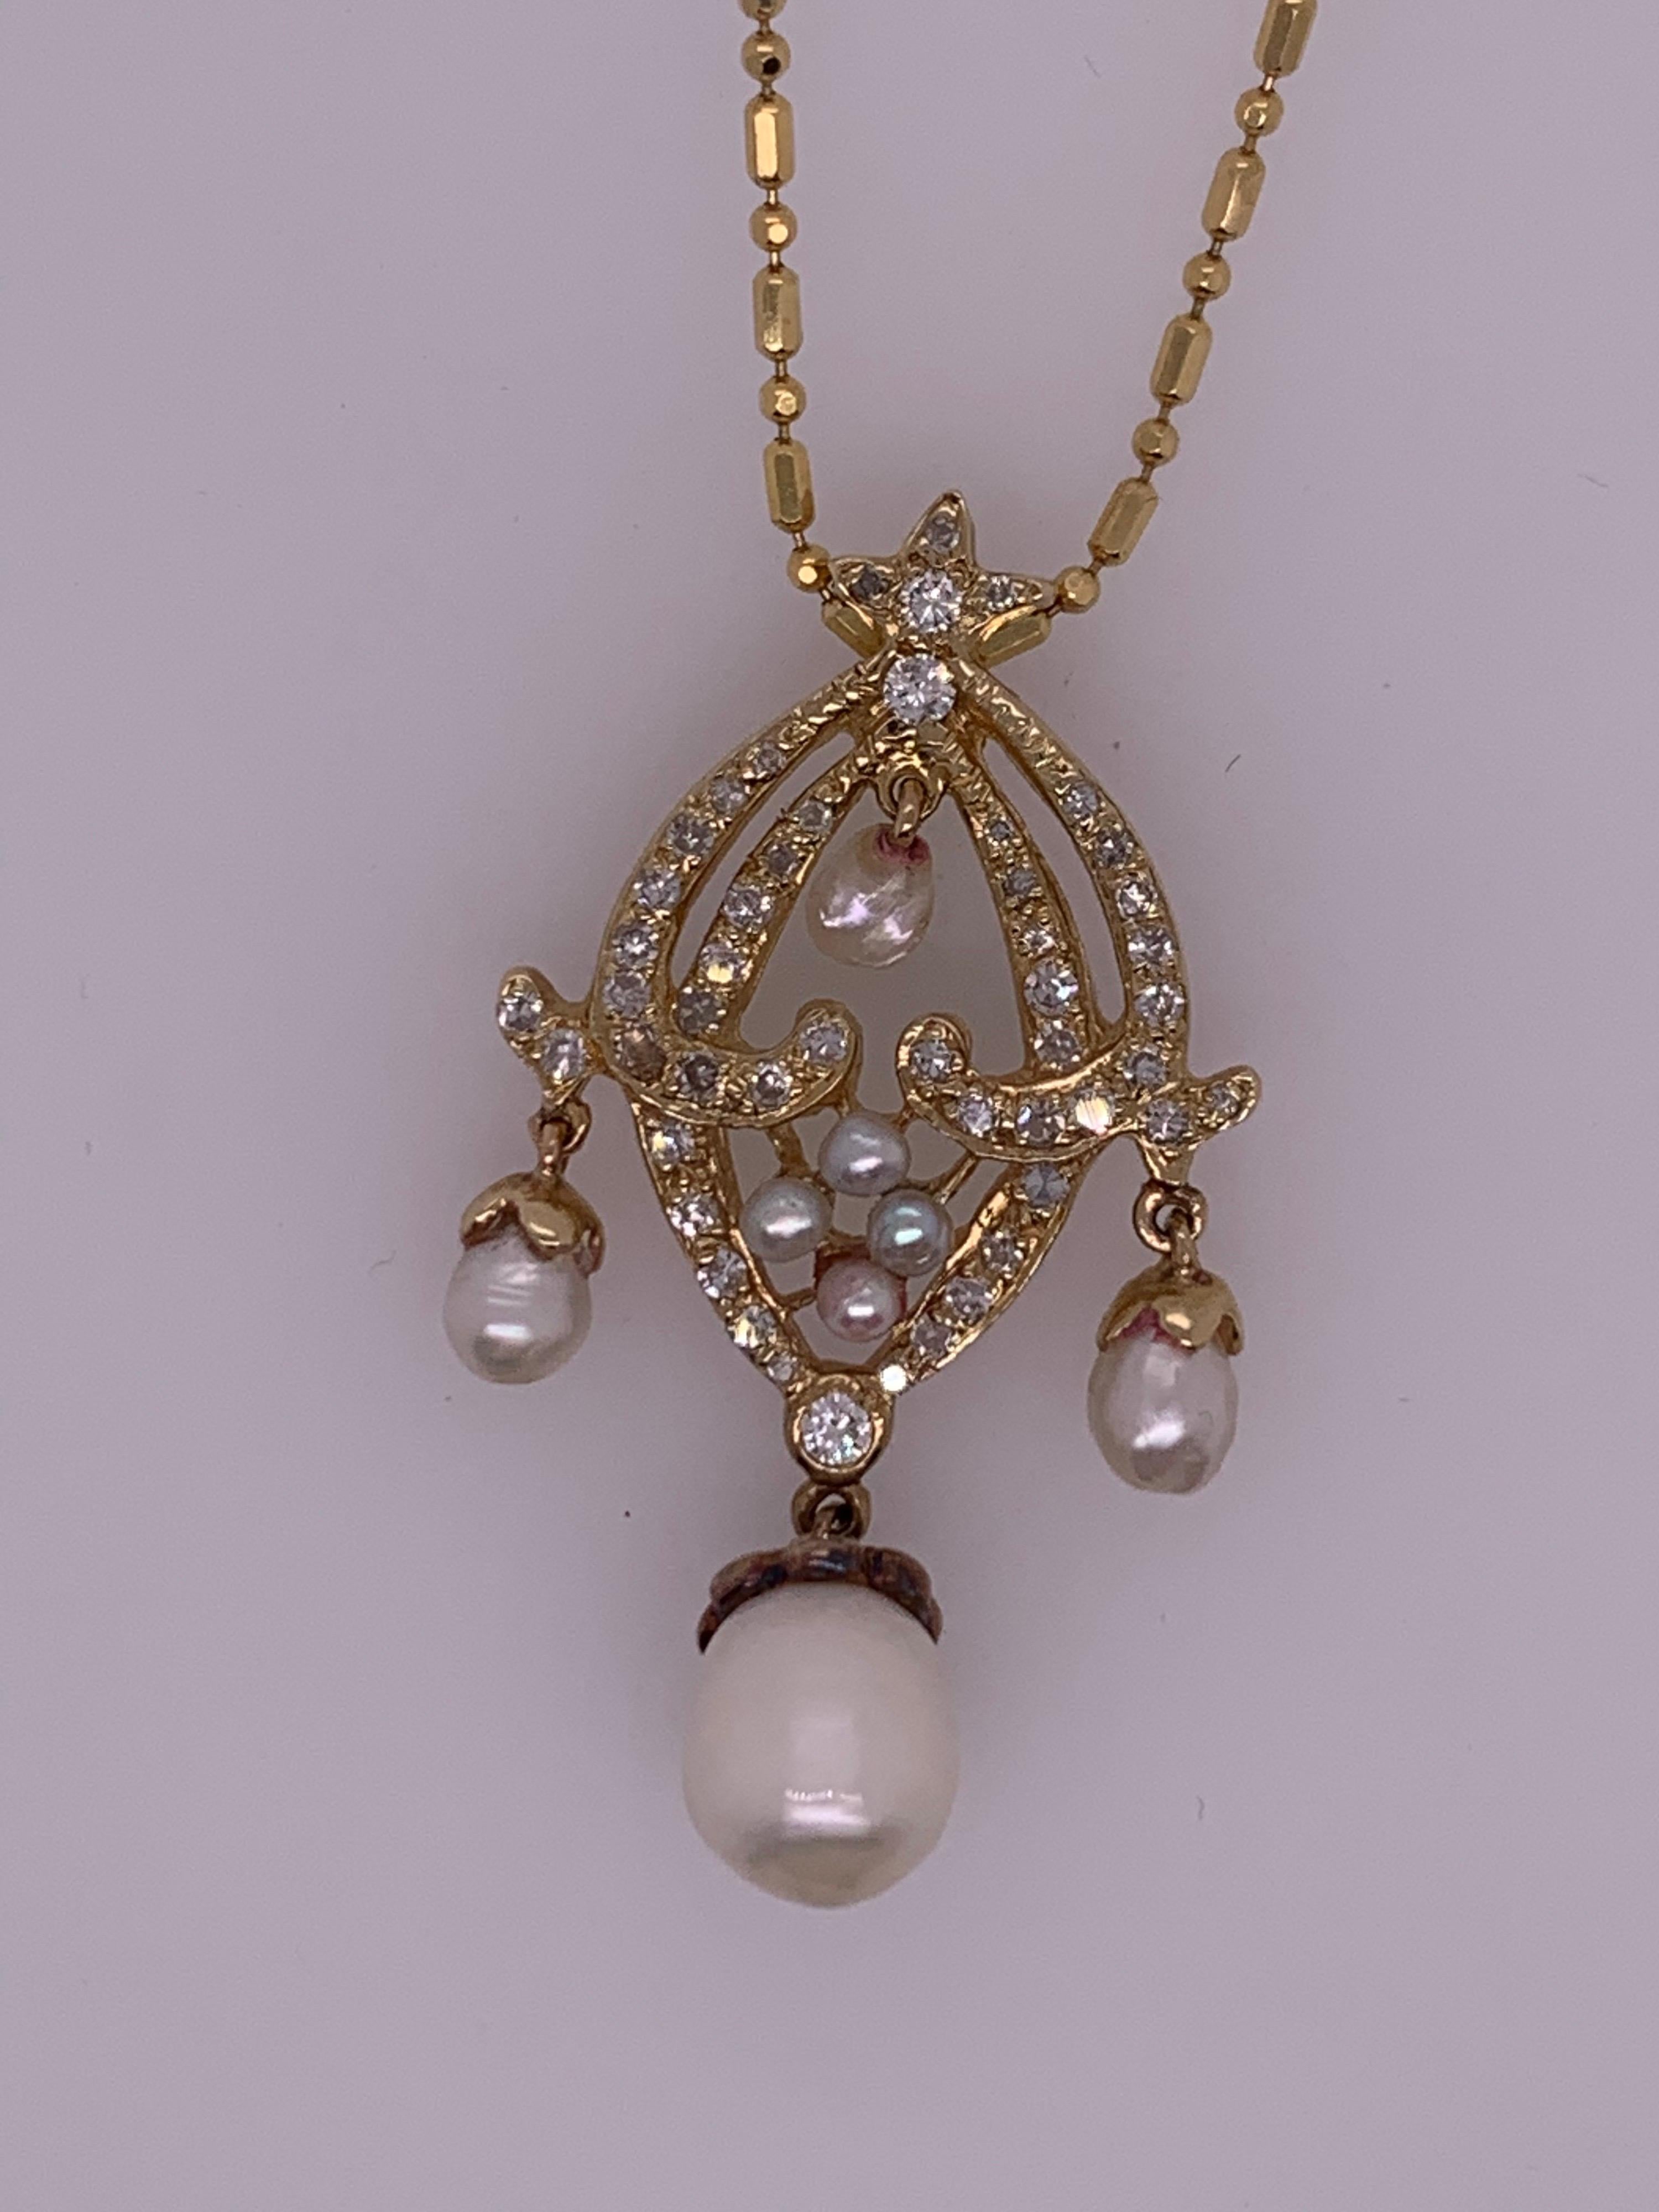 Retro Gold Pendant 0.70 Carat Natural Round Diamond Abd Pearl, circa 1950 In Good Condition For Sale In Los Angeles, CA